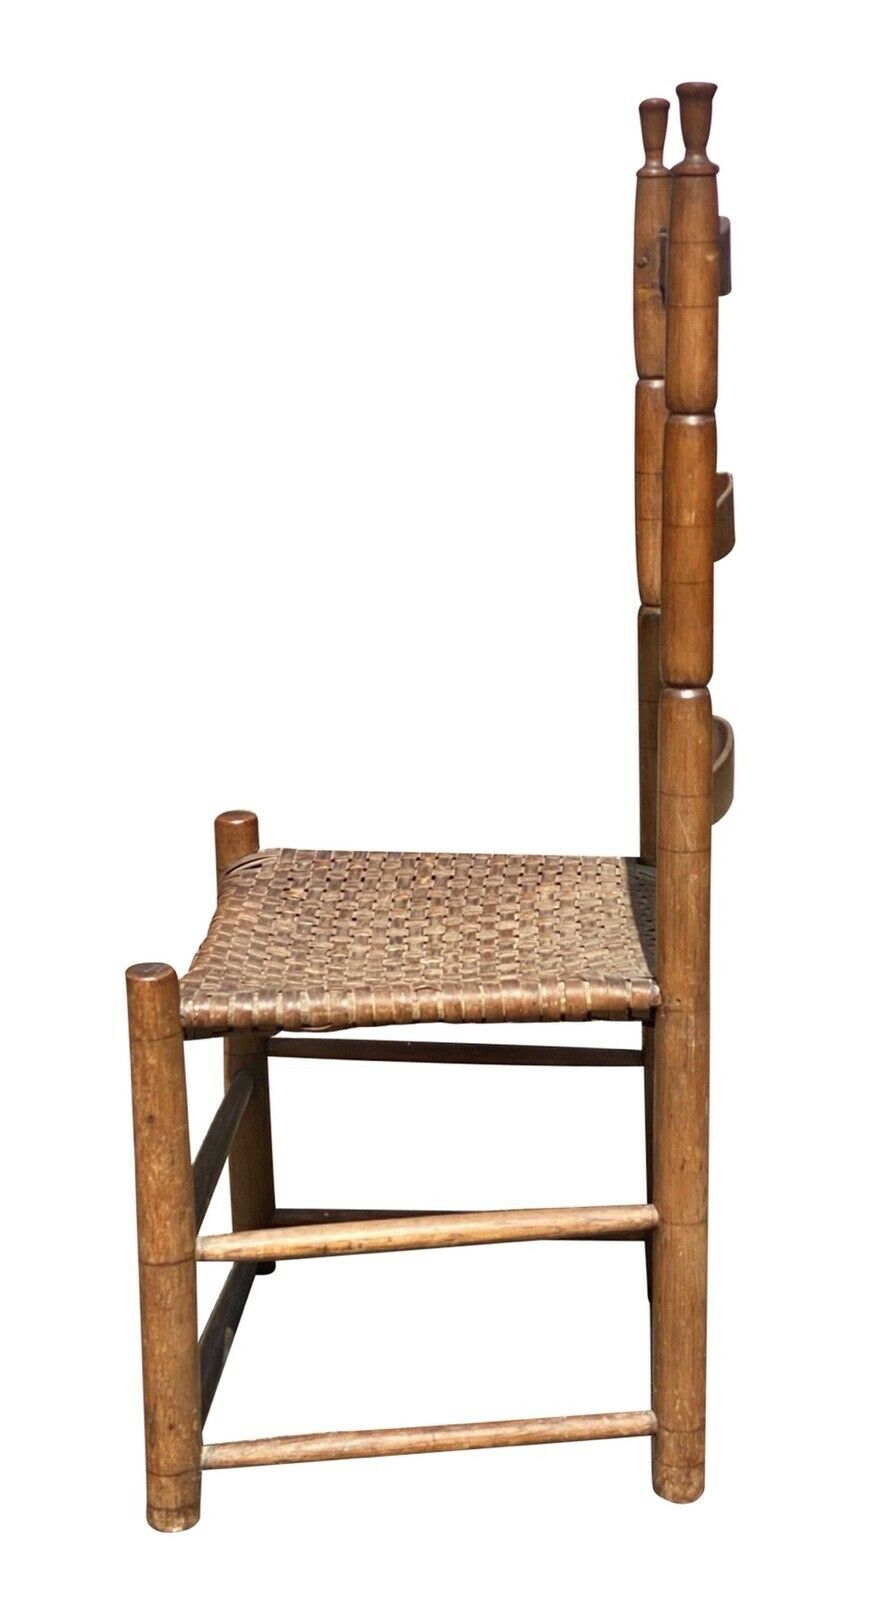 18th C Antique Queen Anne Maple & Ash Ladderback Chair W/ Splint Seat